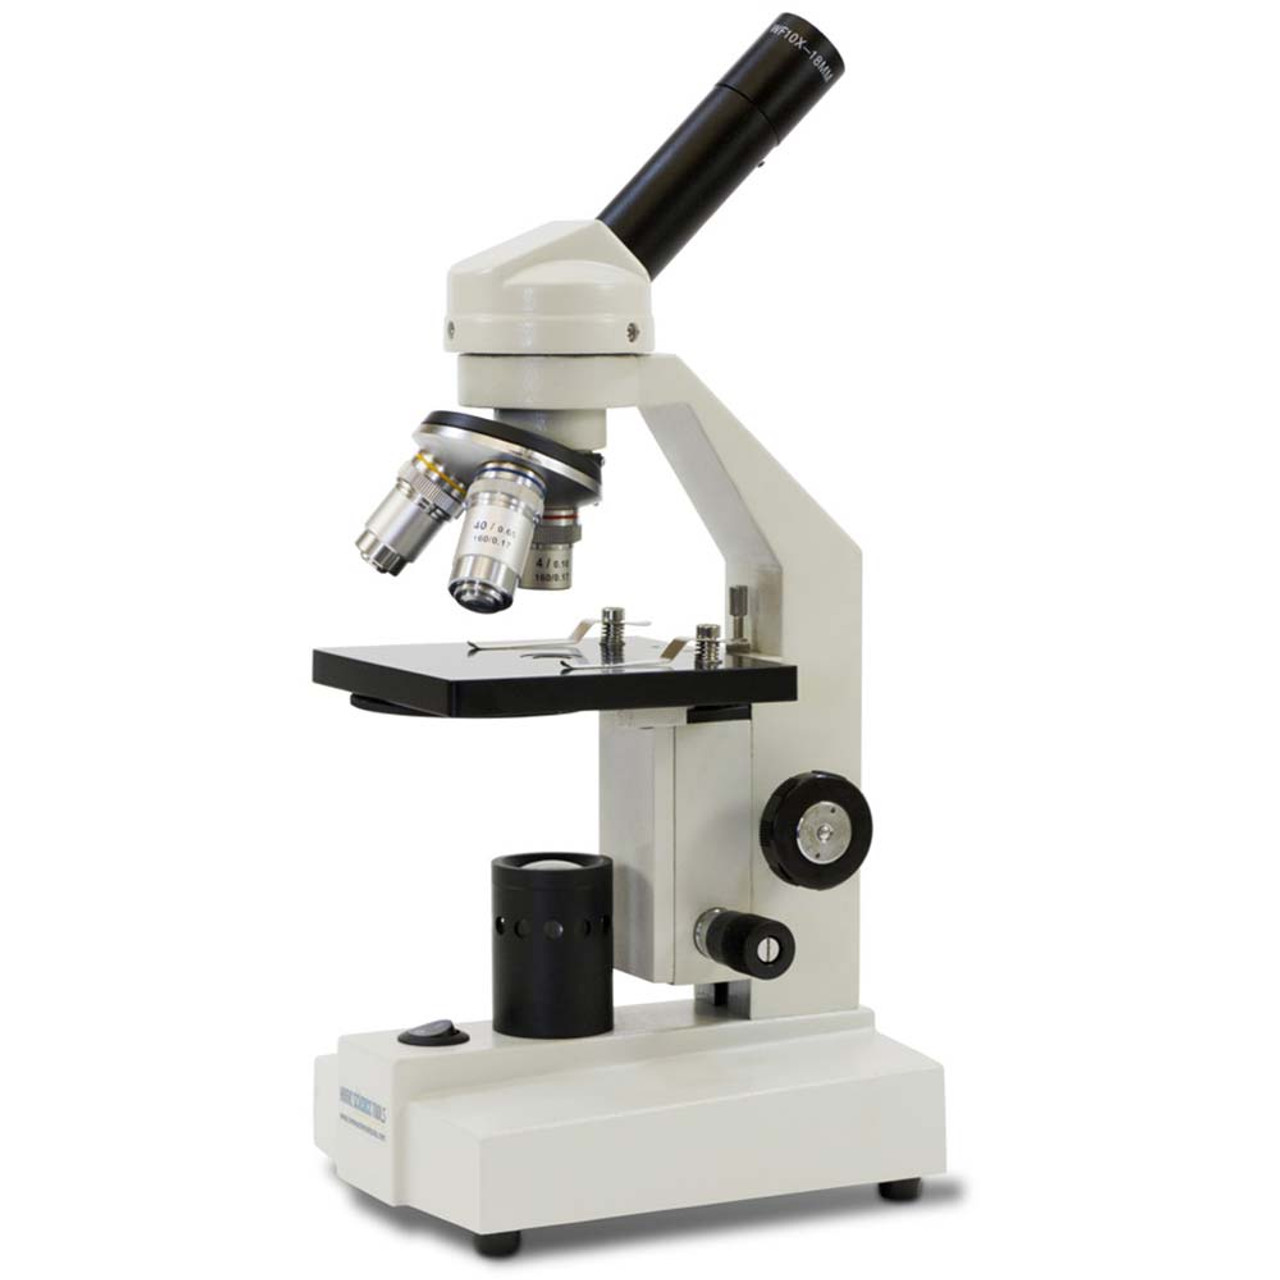 microscope gift guide - home microscope